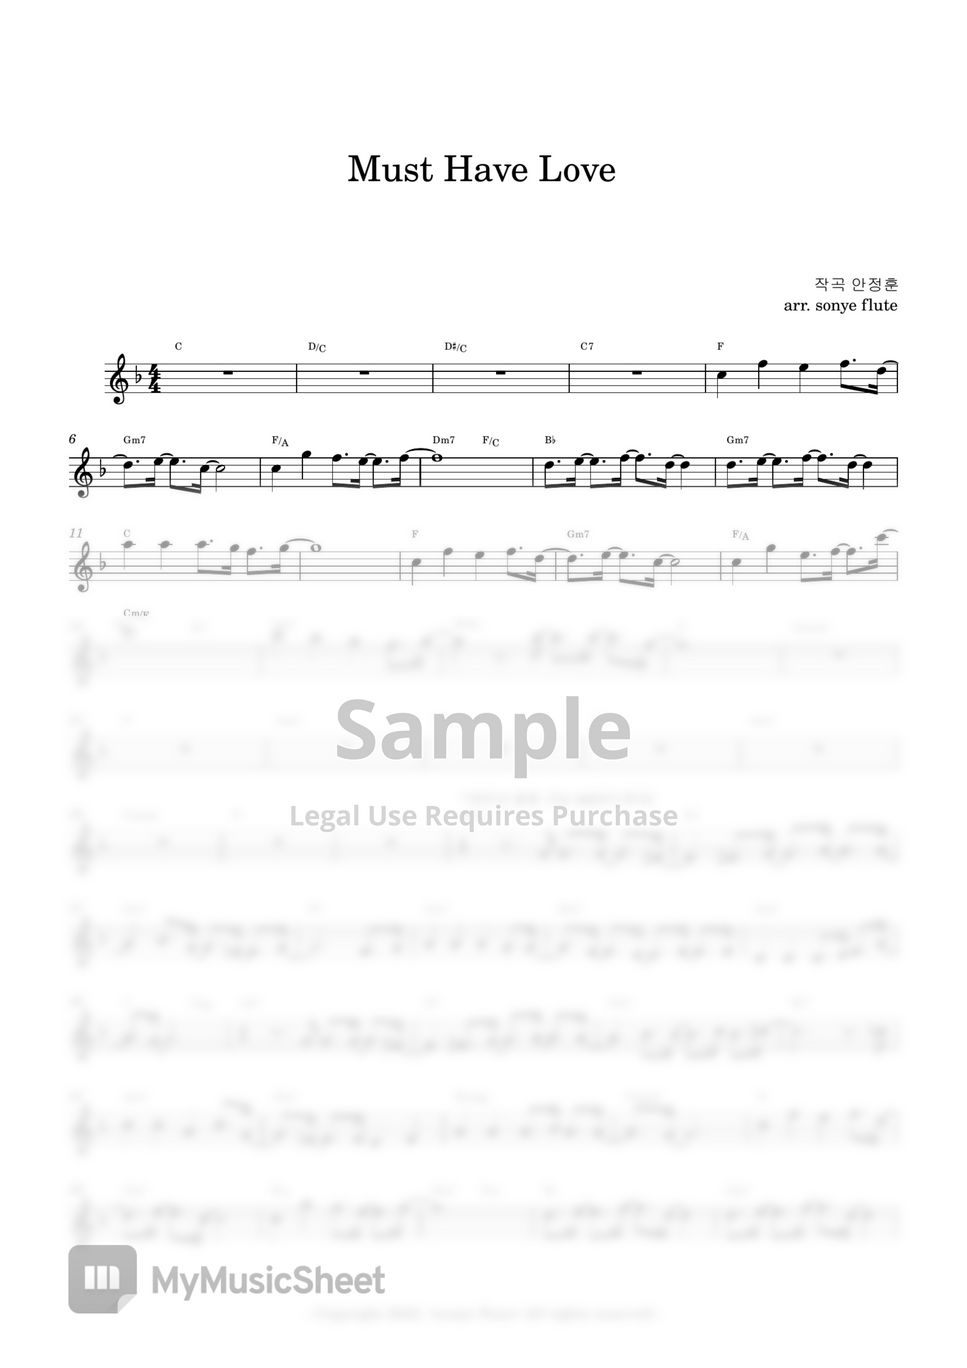 SG 워너비 & 브라운아이드걸스 - Must Have Love (Flute Sheet Music) by sonye flute